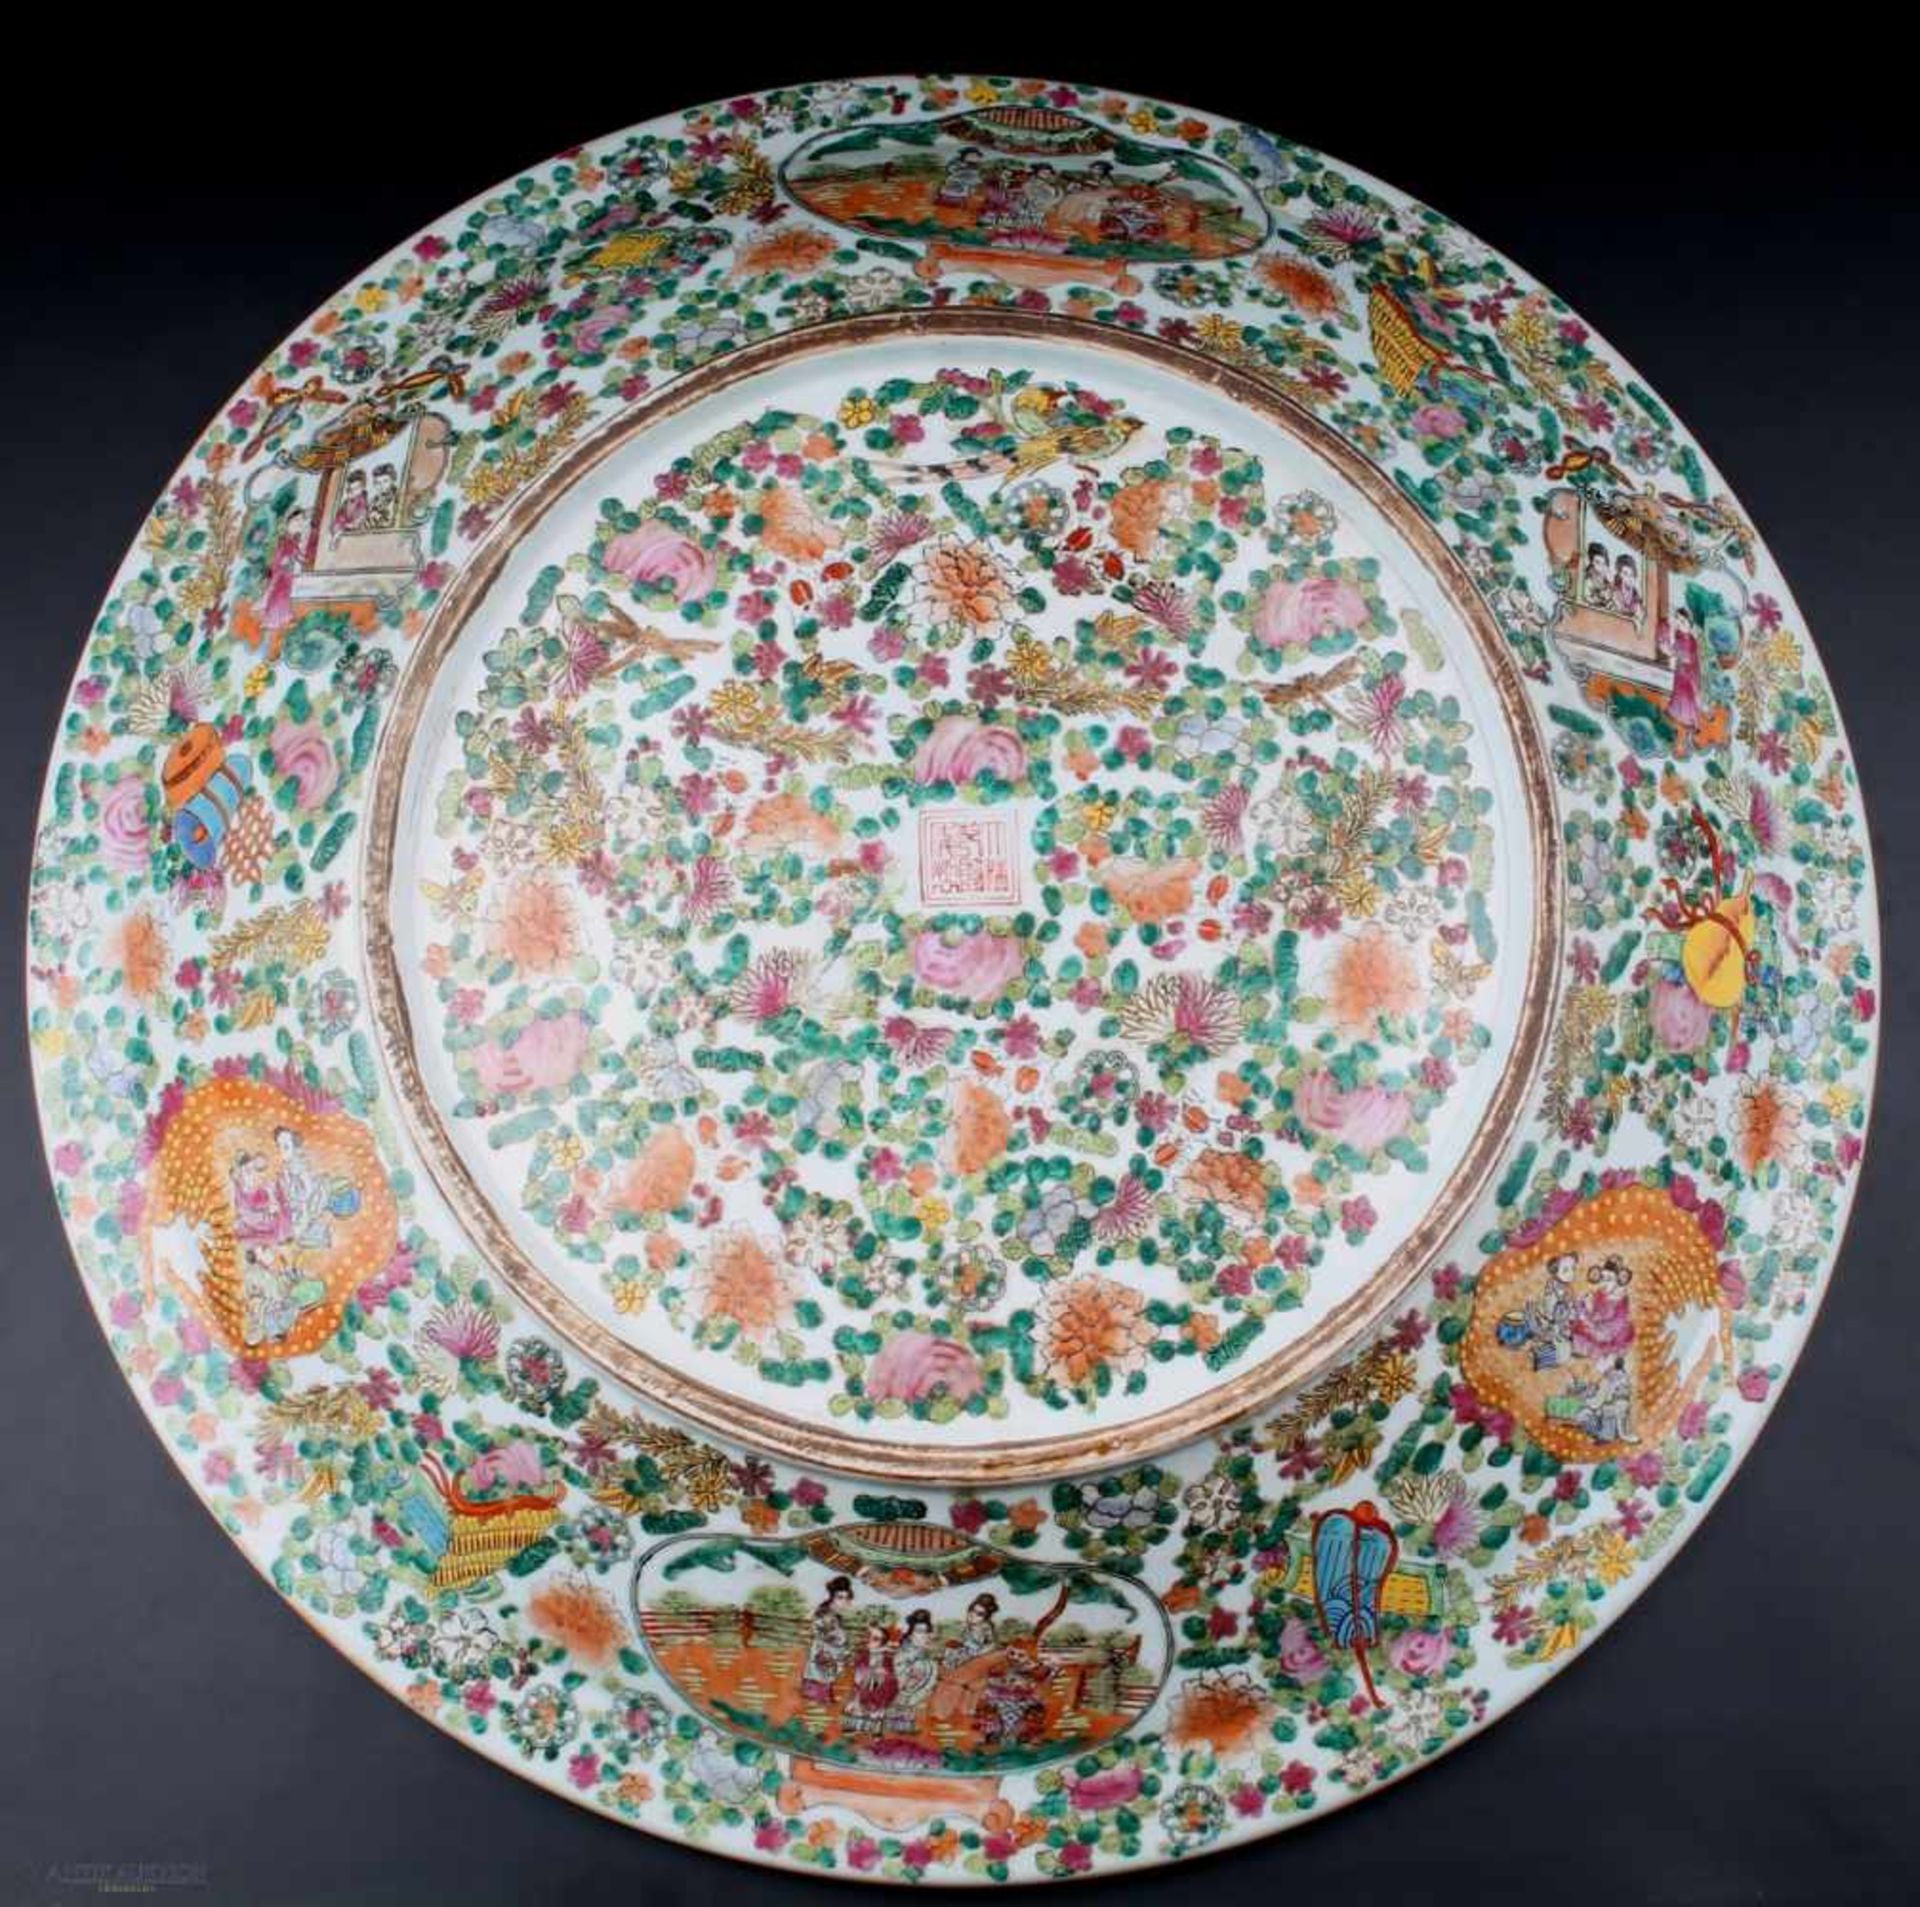 Riesige Schale D62cm, China, Porzellanschale polychrome Malerei, zentraler Medaillon mit großer - Bild 5 aus 5